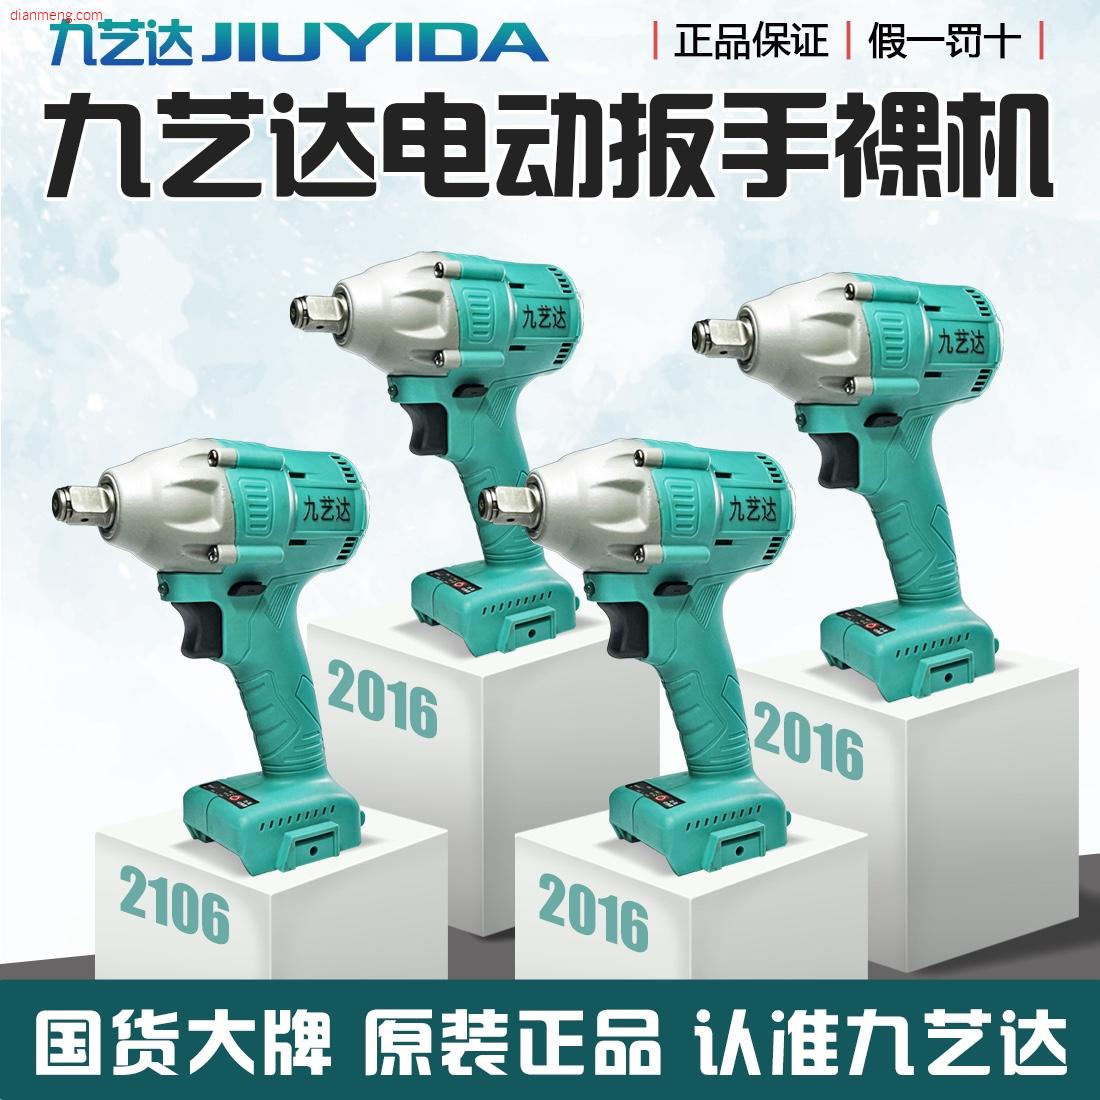 JYD锂电工具品质店LOGO